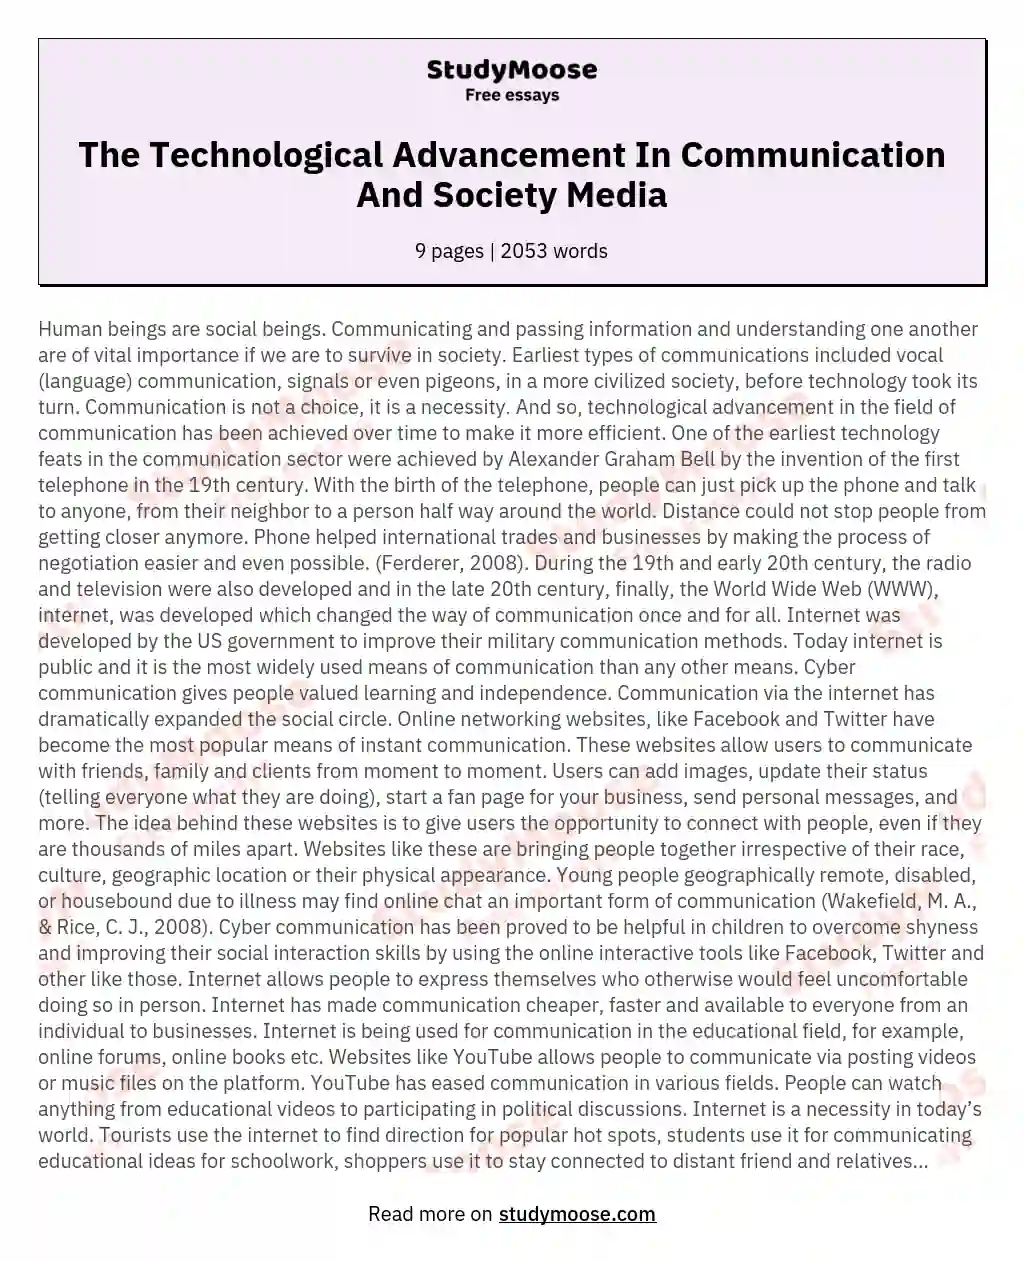 write an essay on technological advancement